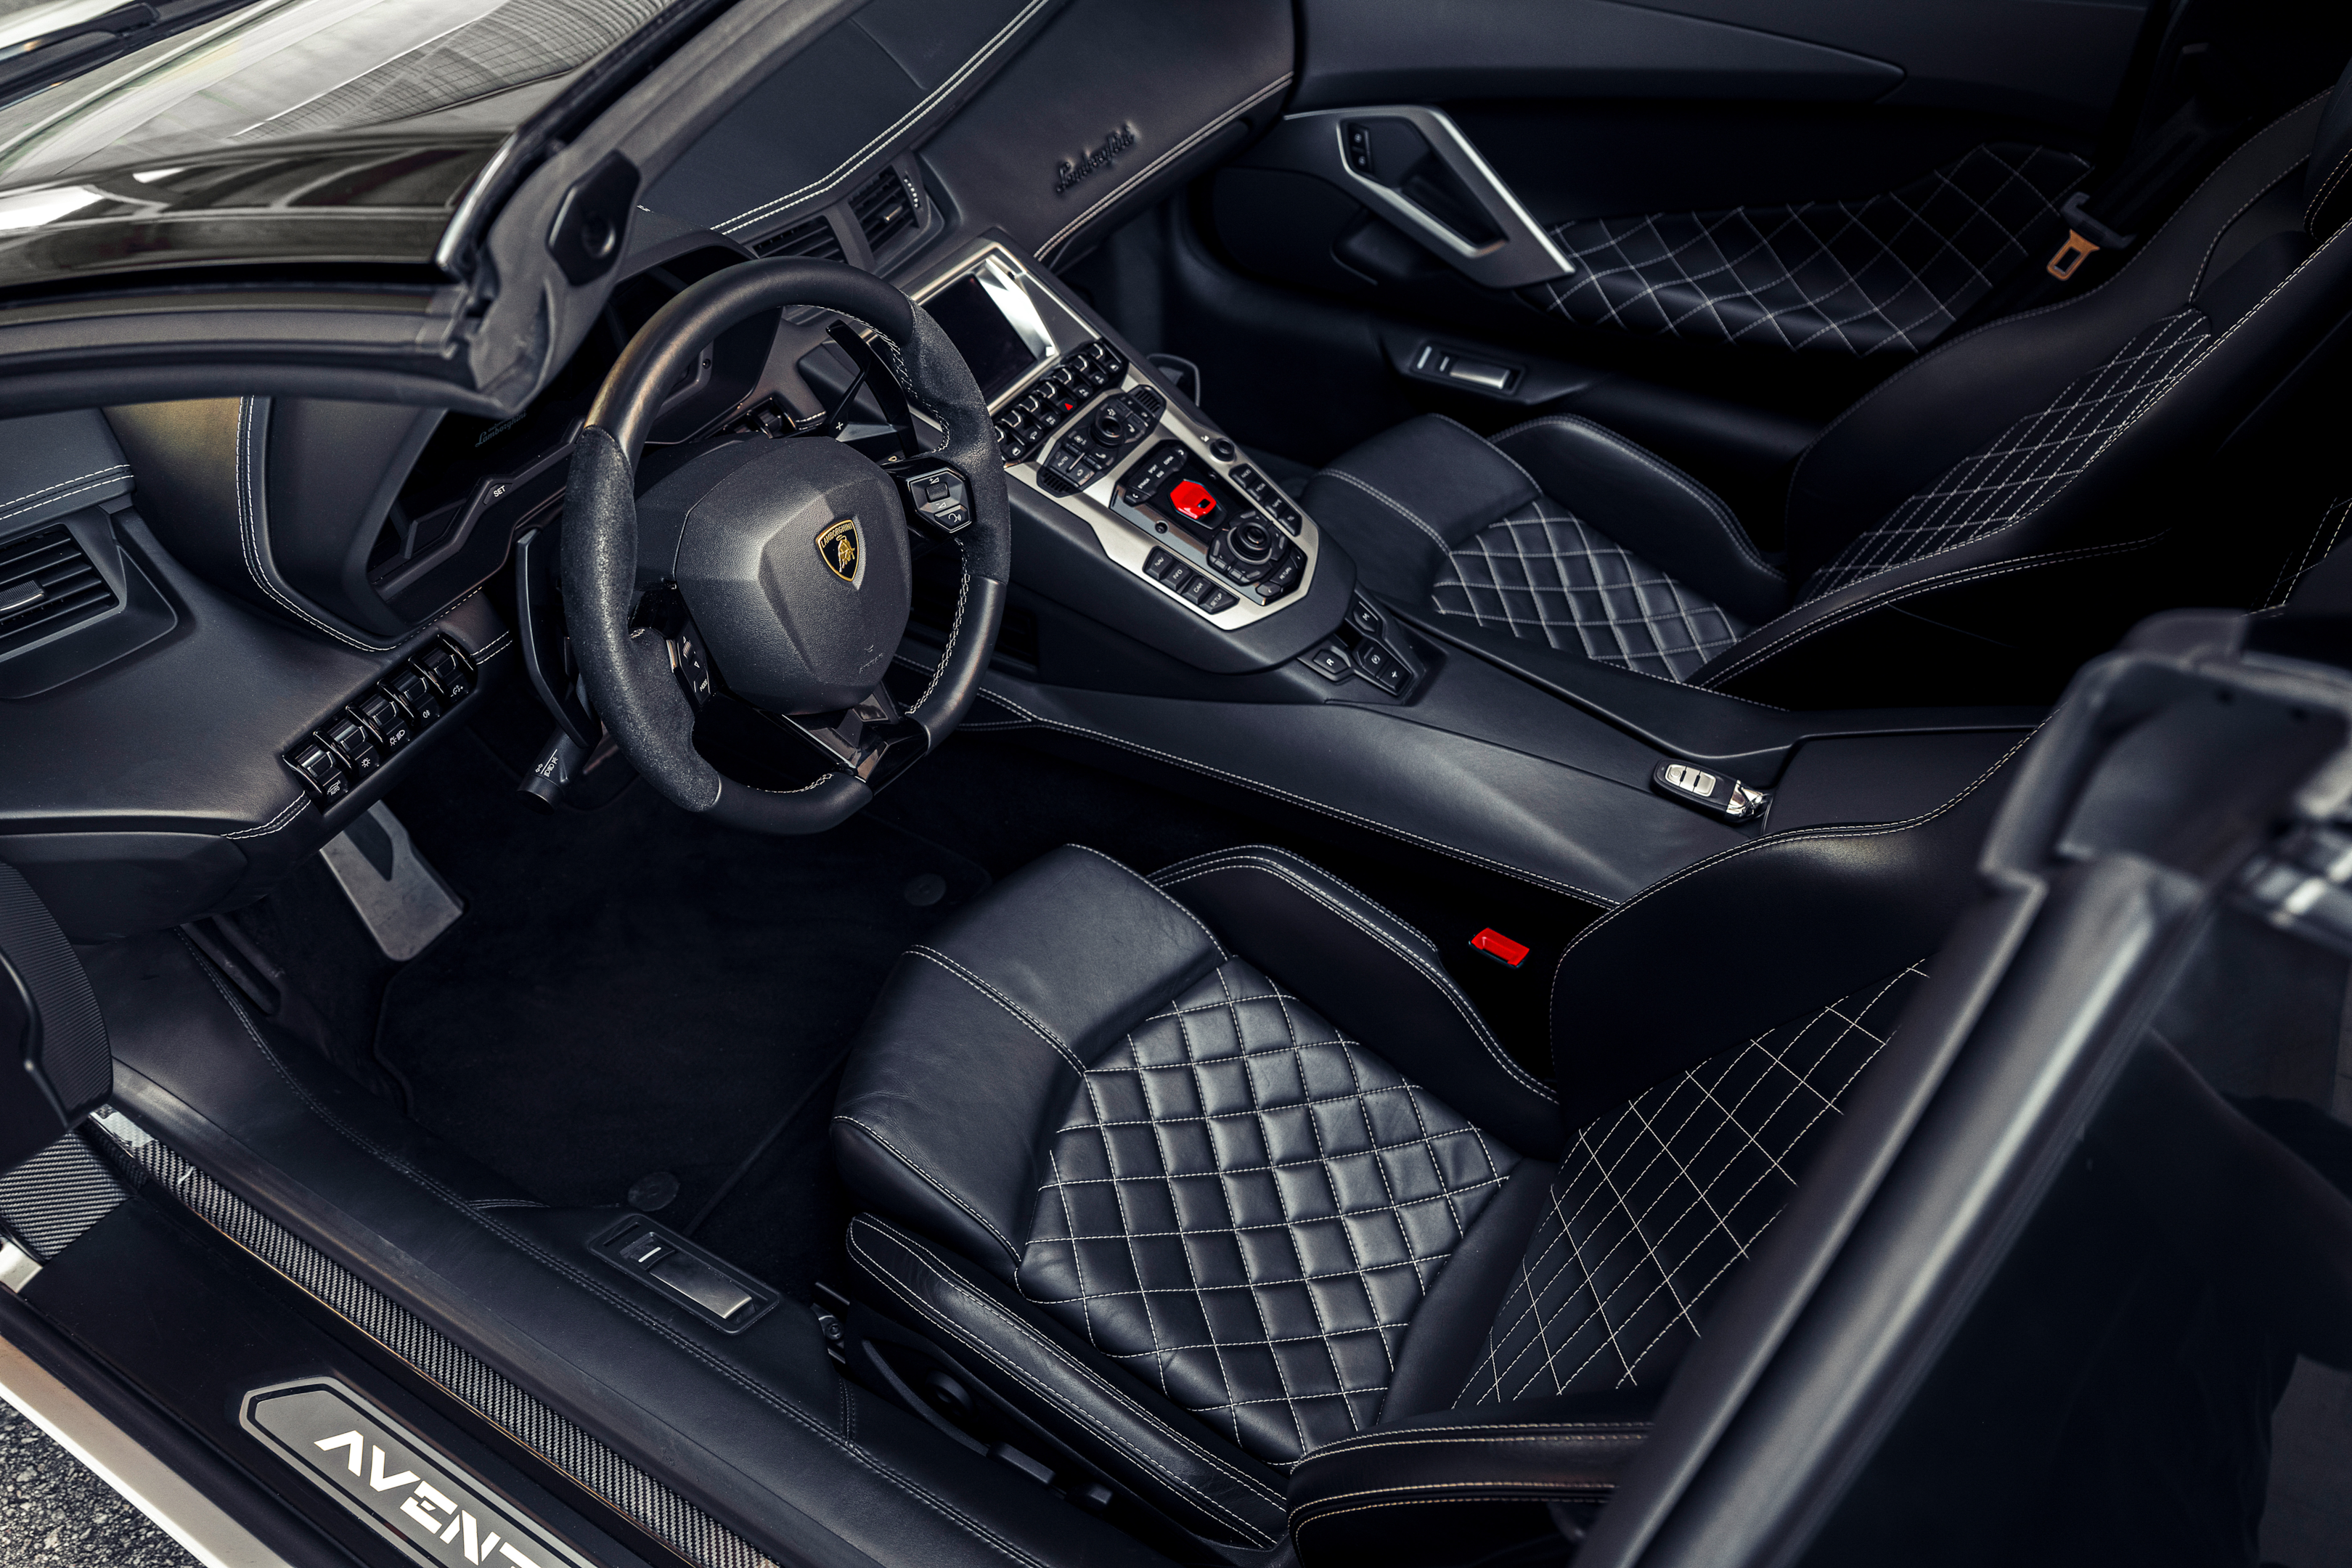 Image of the luxurious interior of a Lamborghini Aventador